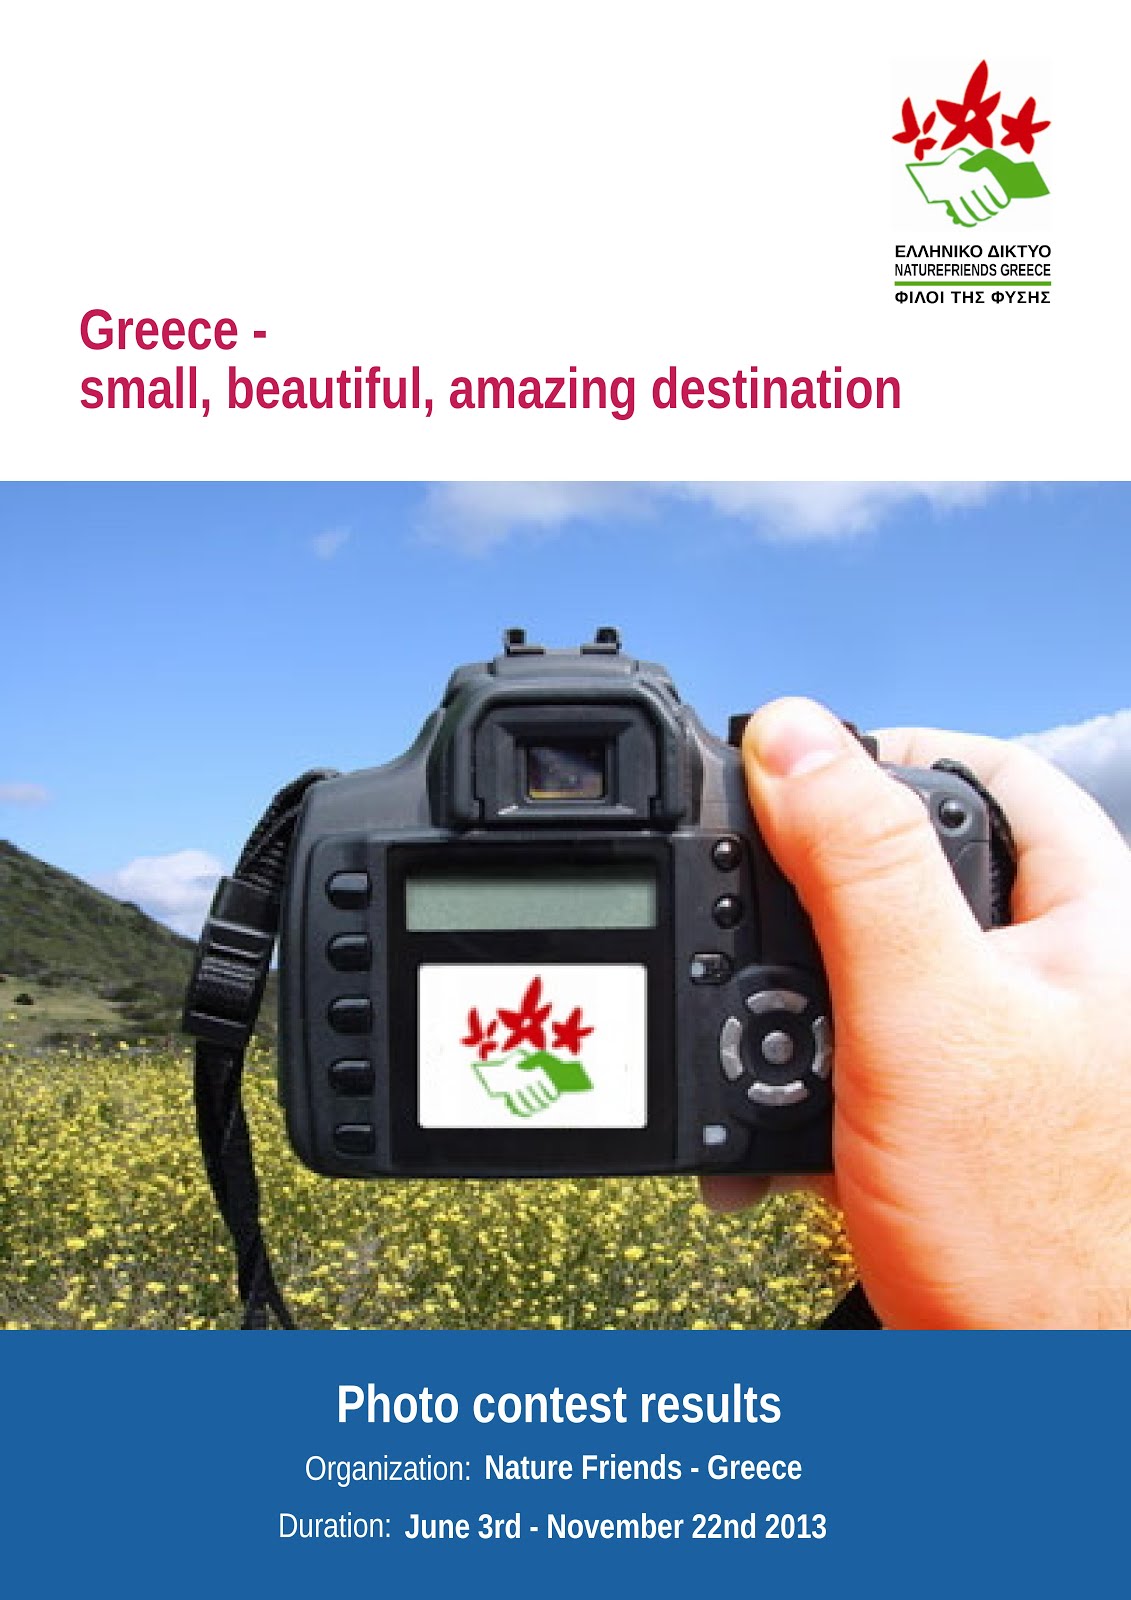 Greece: small, beutifull, amazing destination